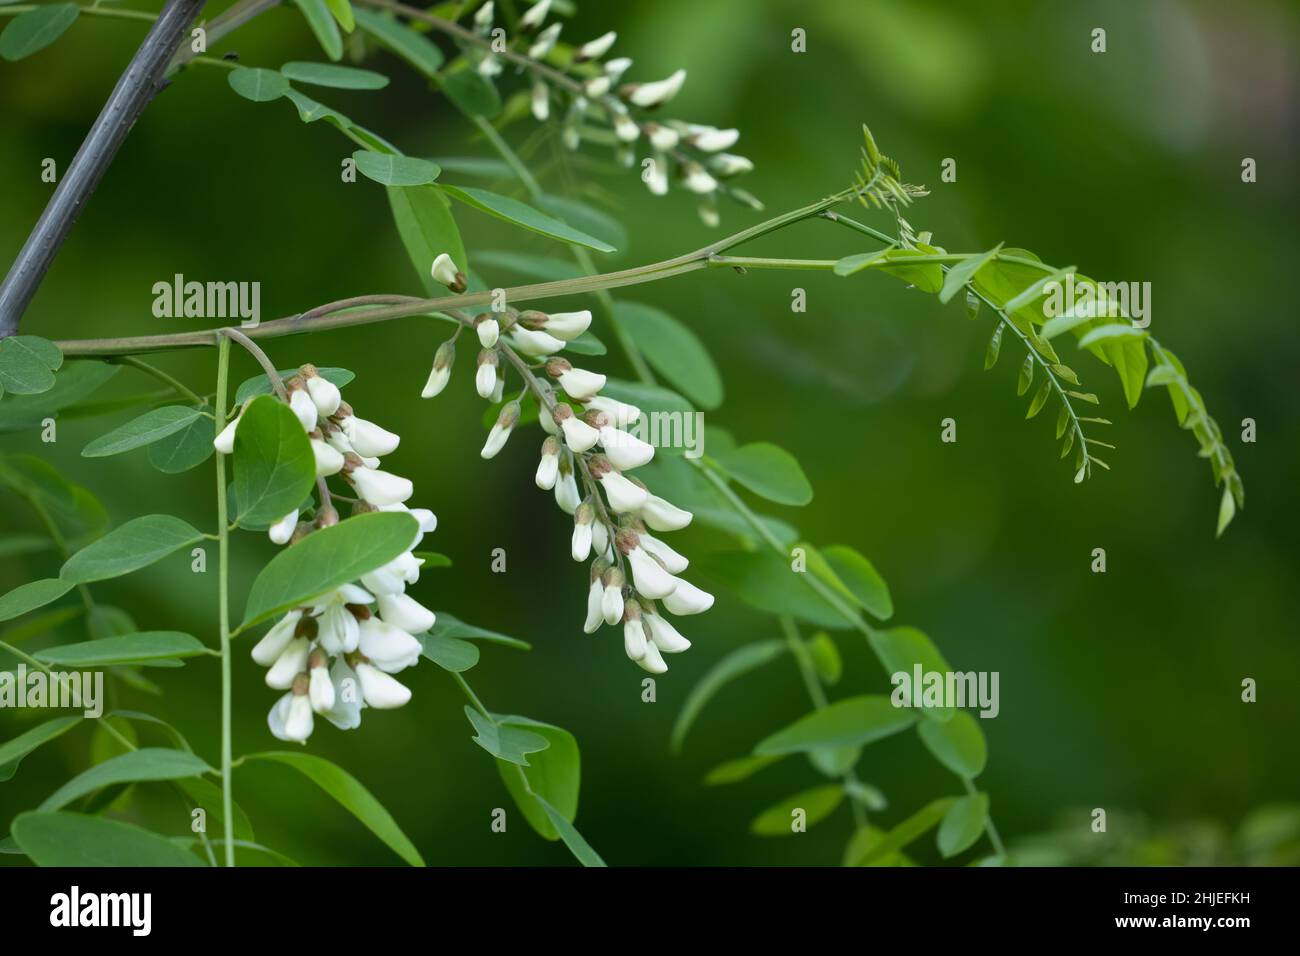 Robinia pseudoacacia or false acacia, black locust, deciduous tree branch with leaves and flowers, pea family: Fabaceae. Stock Photo